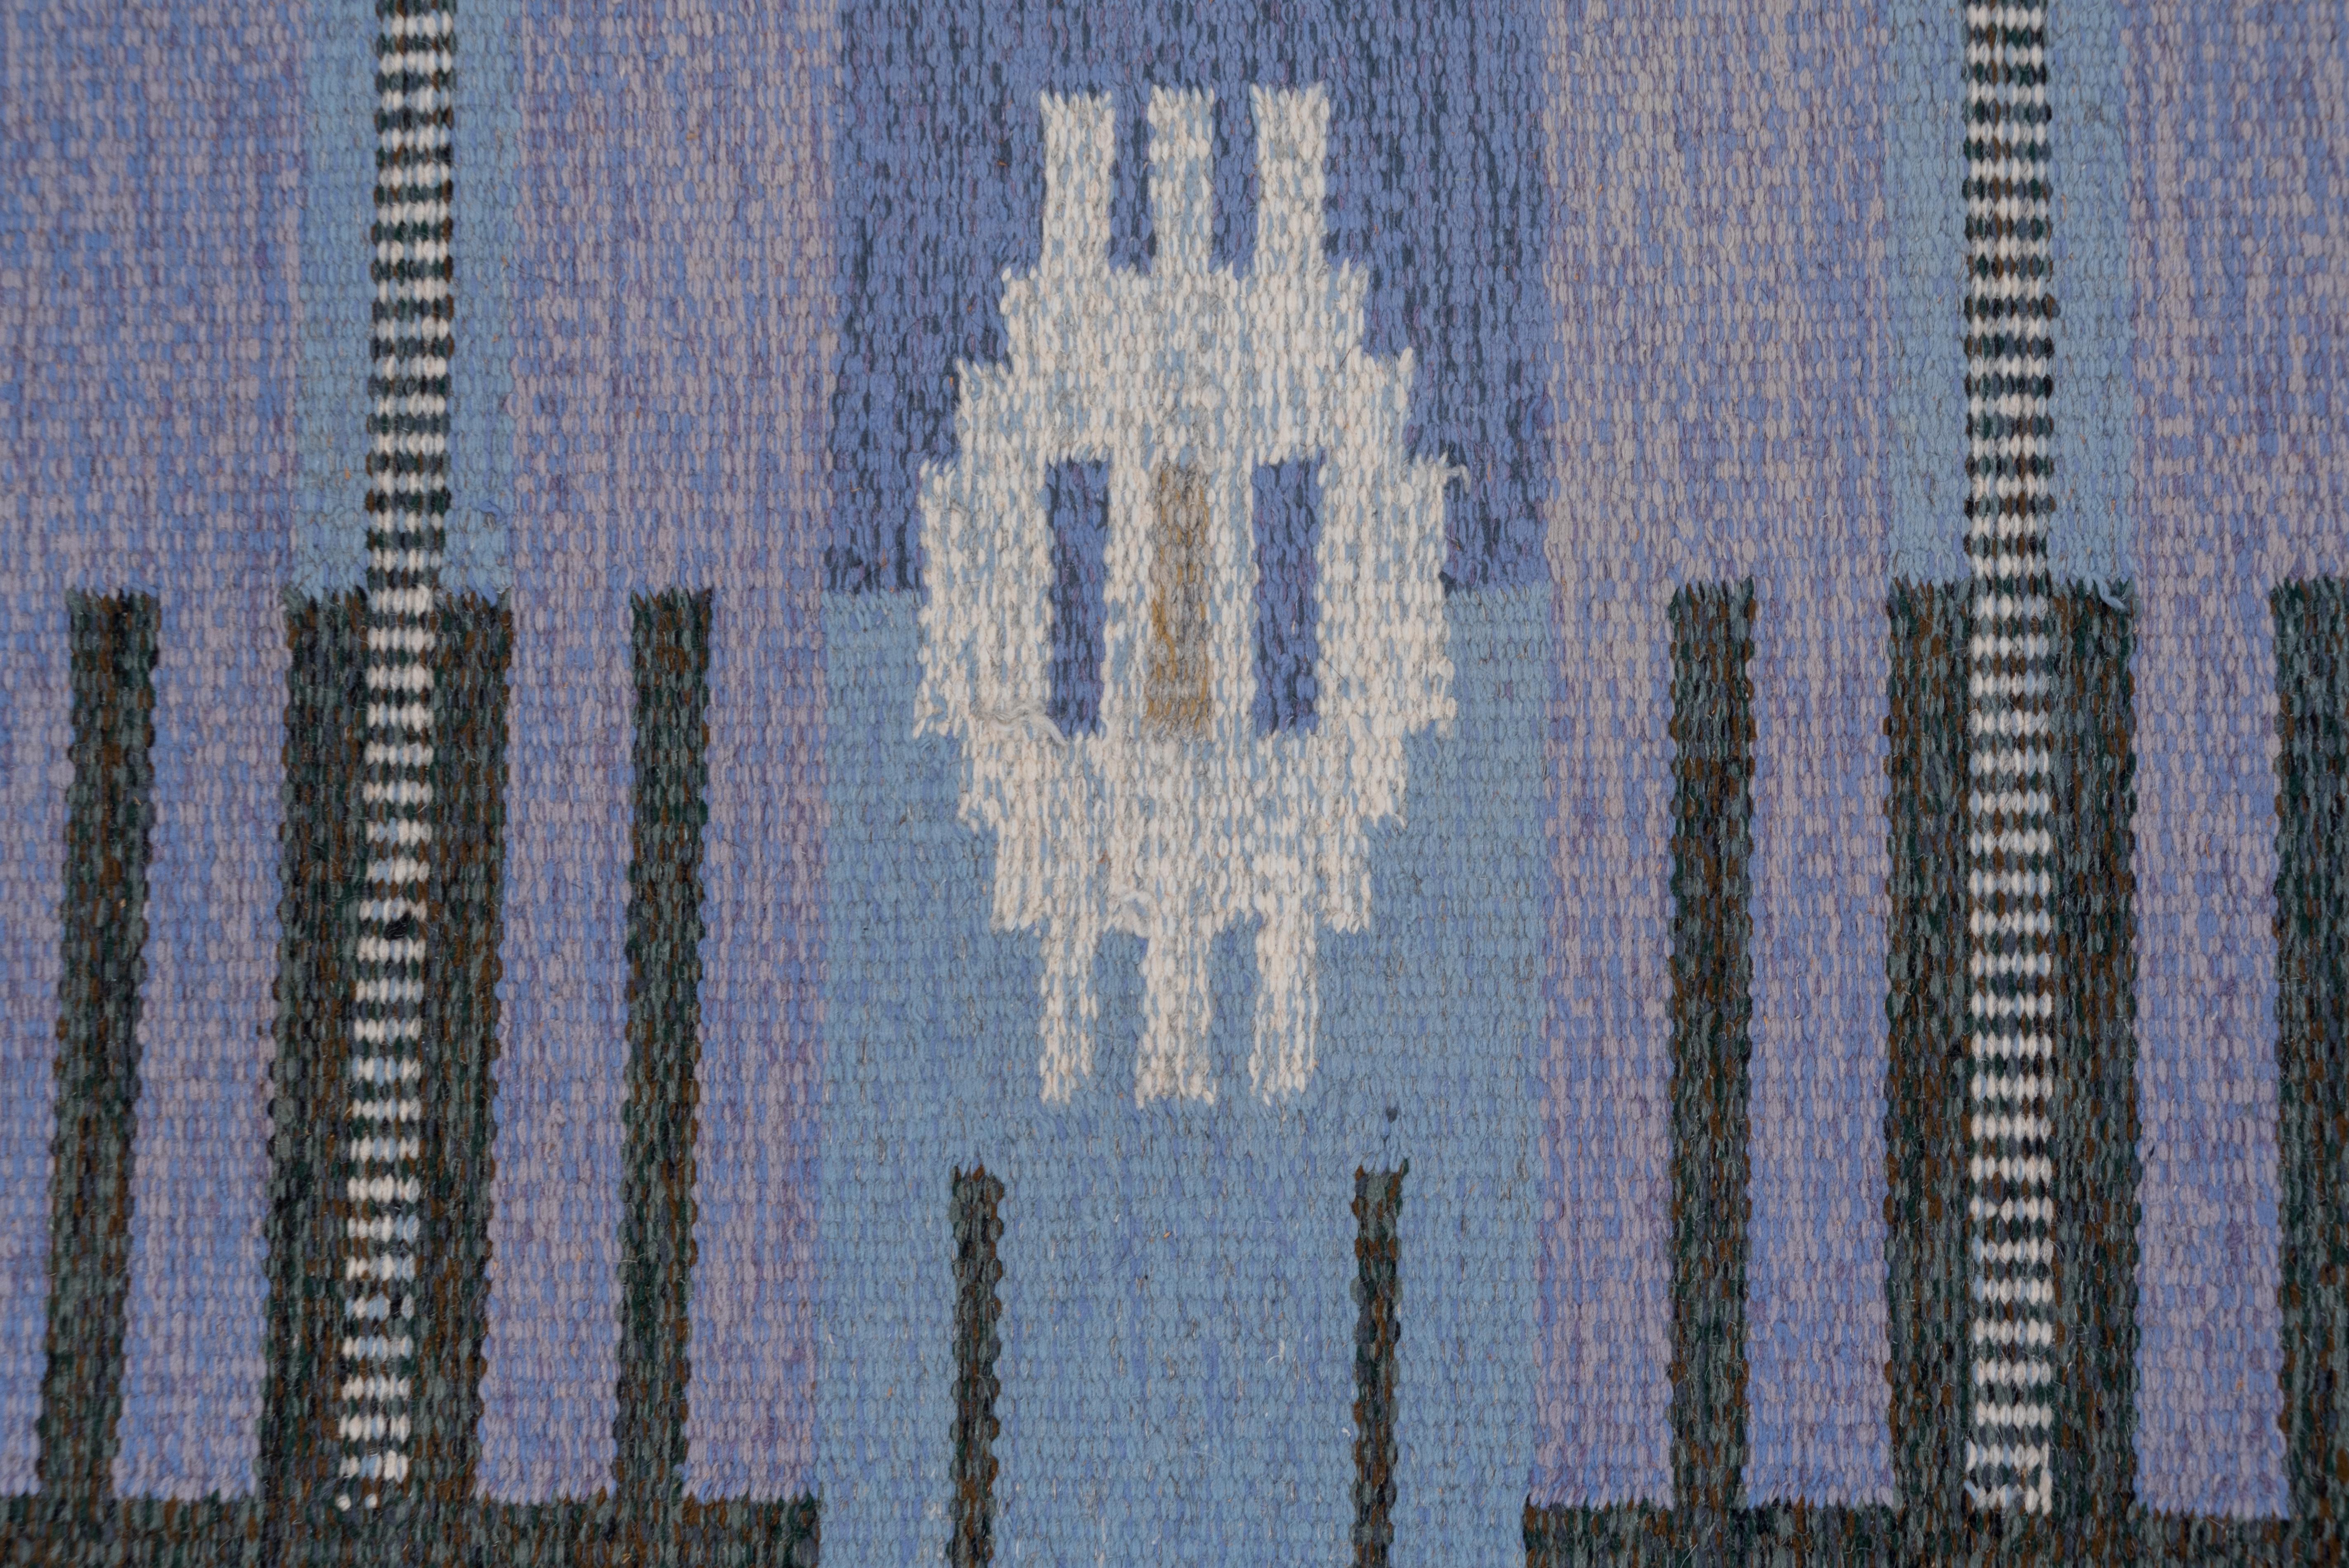 Scandinavian Modern 1940s Scandinavian Rollaken Flatweave Rug, Blue Field, Charcoal Gray Border